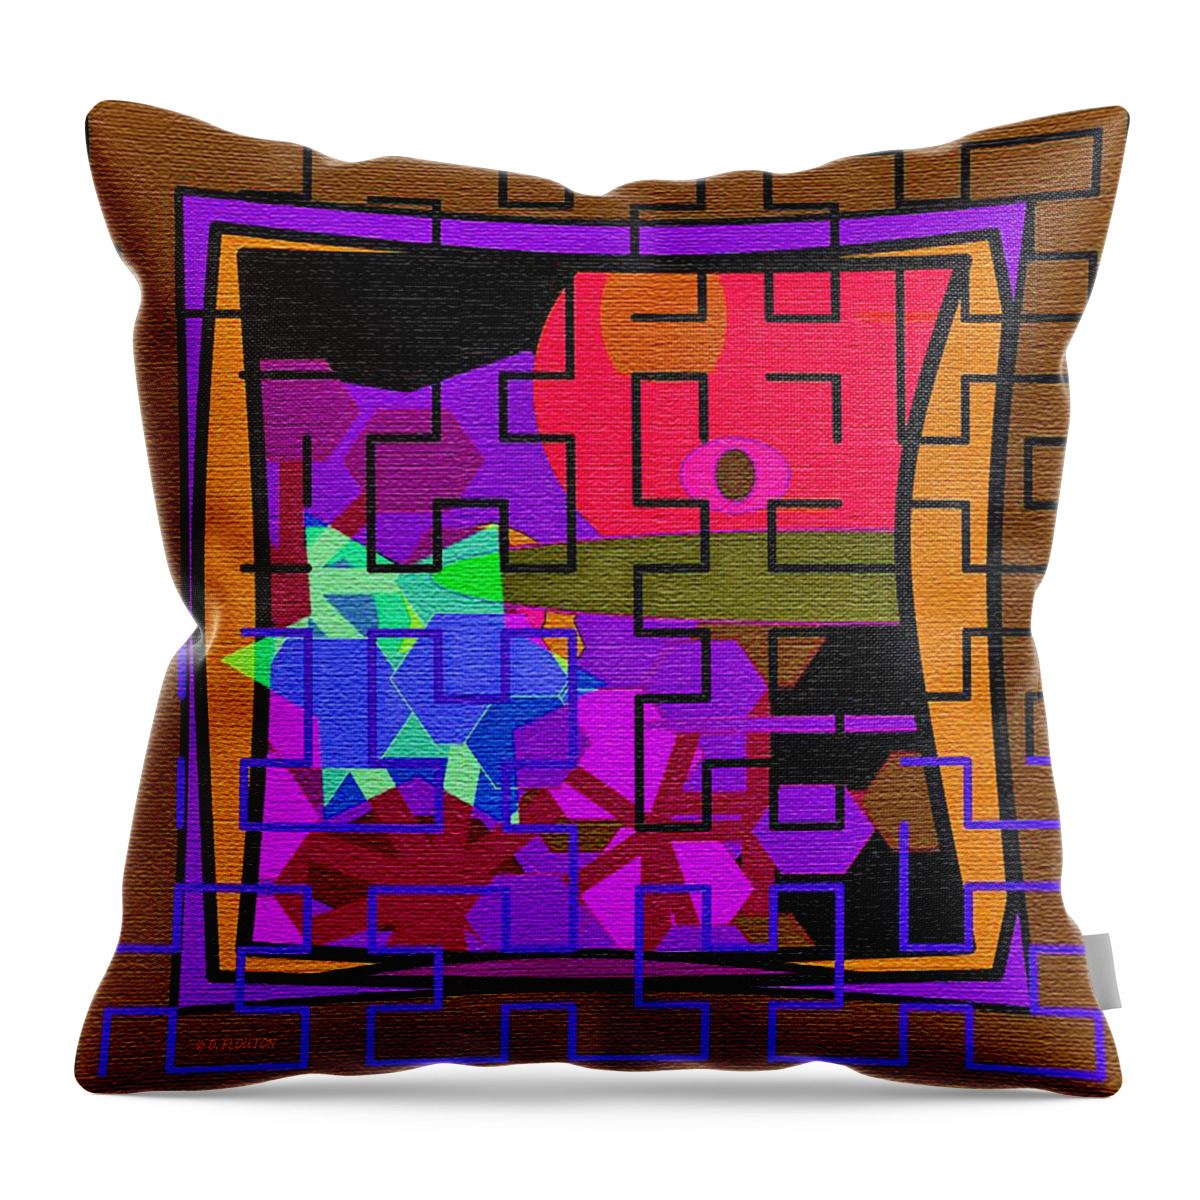 Ebsq Throw Pillow featuring the digital art Purple Brown Maze by Dee Flouton